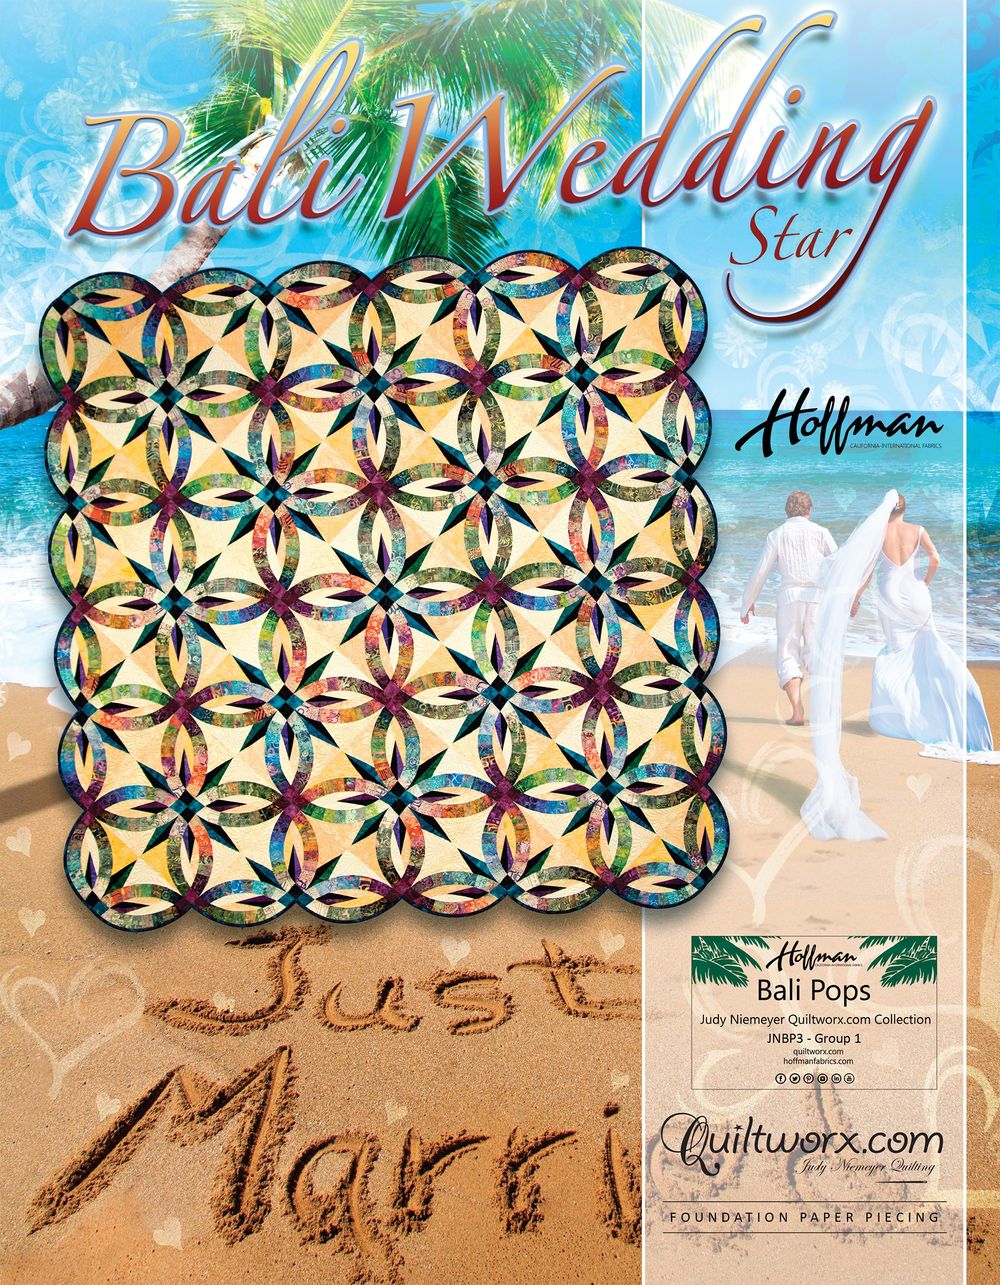 Bali Wedding Star 2014 Foundation Paper Pieced Quilt Pattern by Judy Niemeyer of Quiltworx